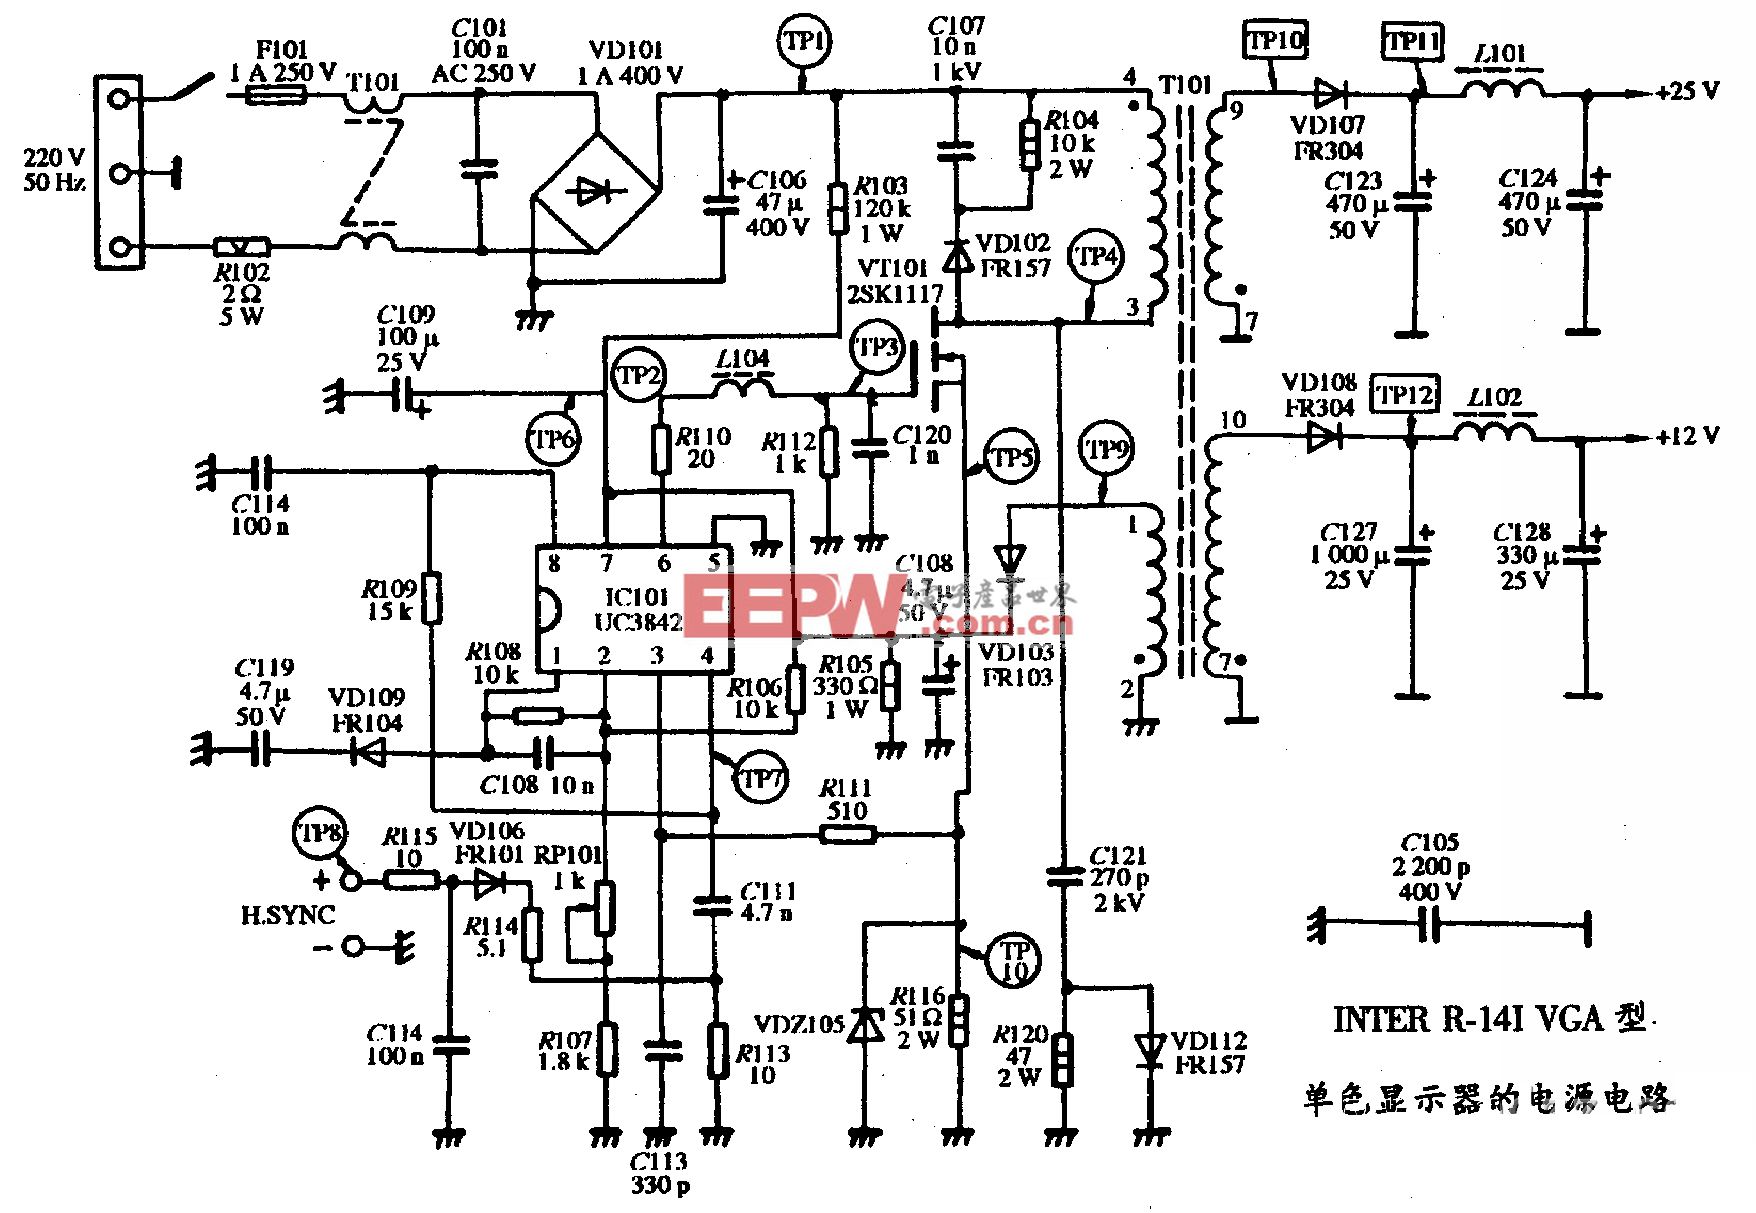 INTER R-14I VGA型单色显示器的电源电路图